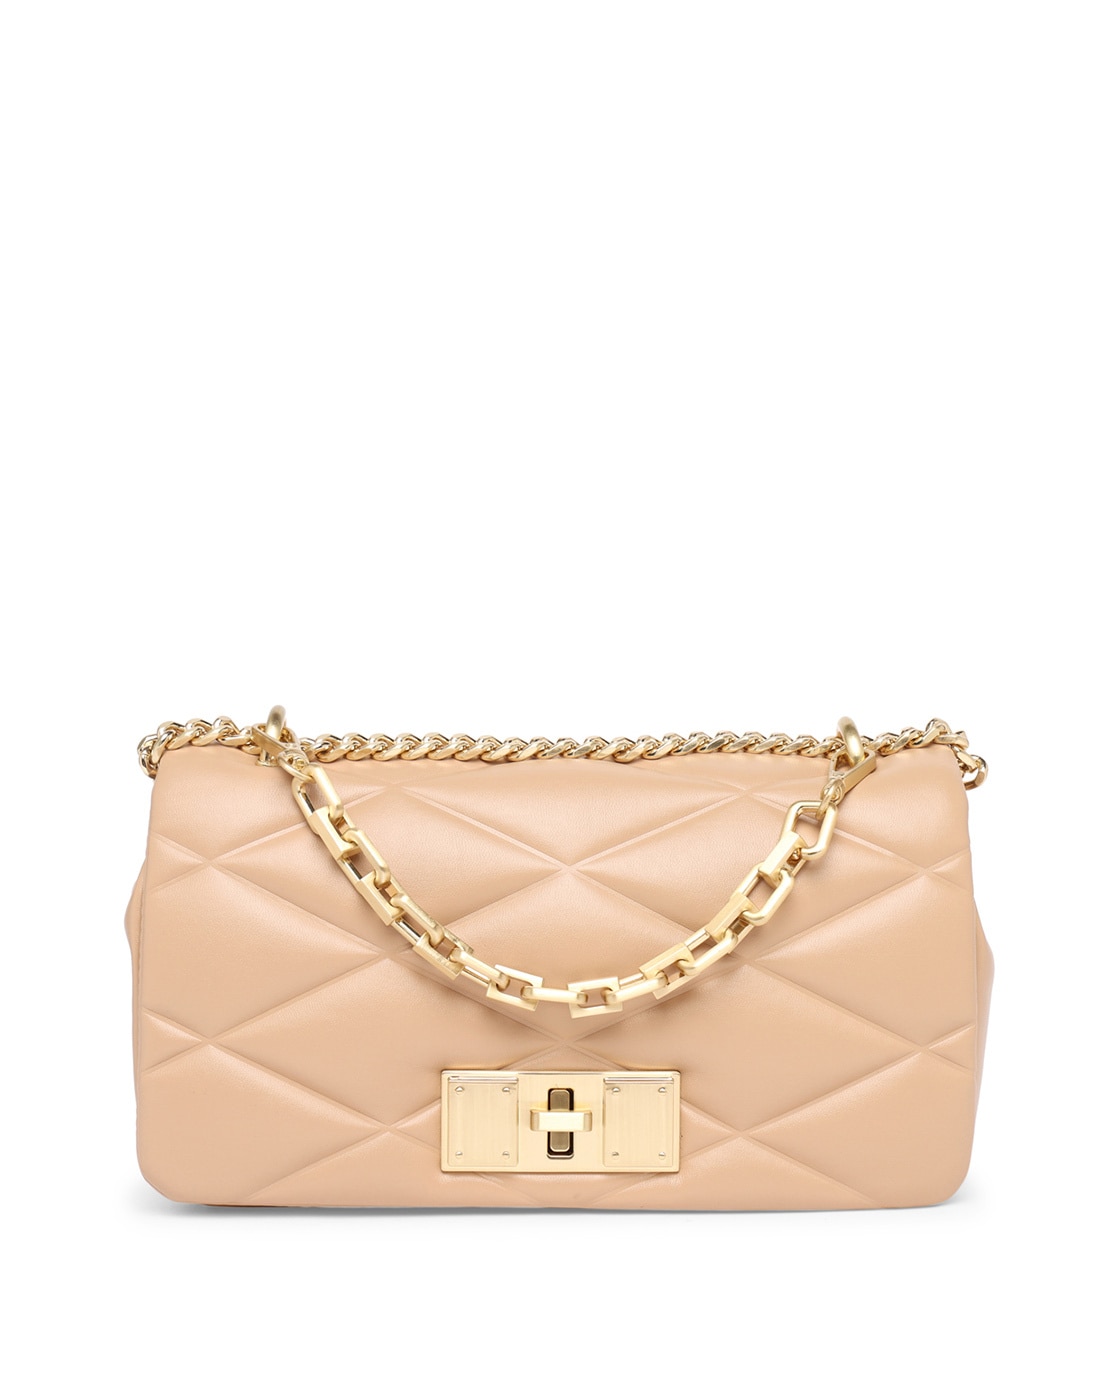 Buy ALDO Black Textured Sling Bag - Handbags for Women 2296935 | Myntra